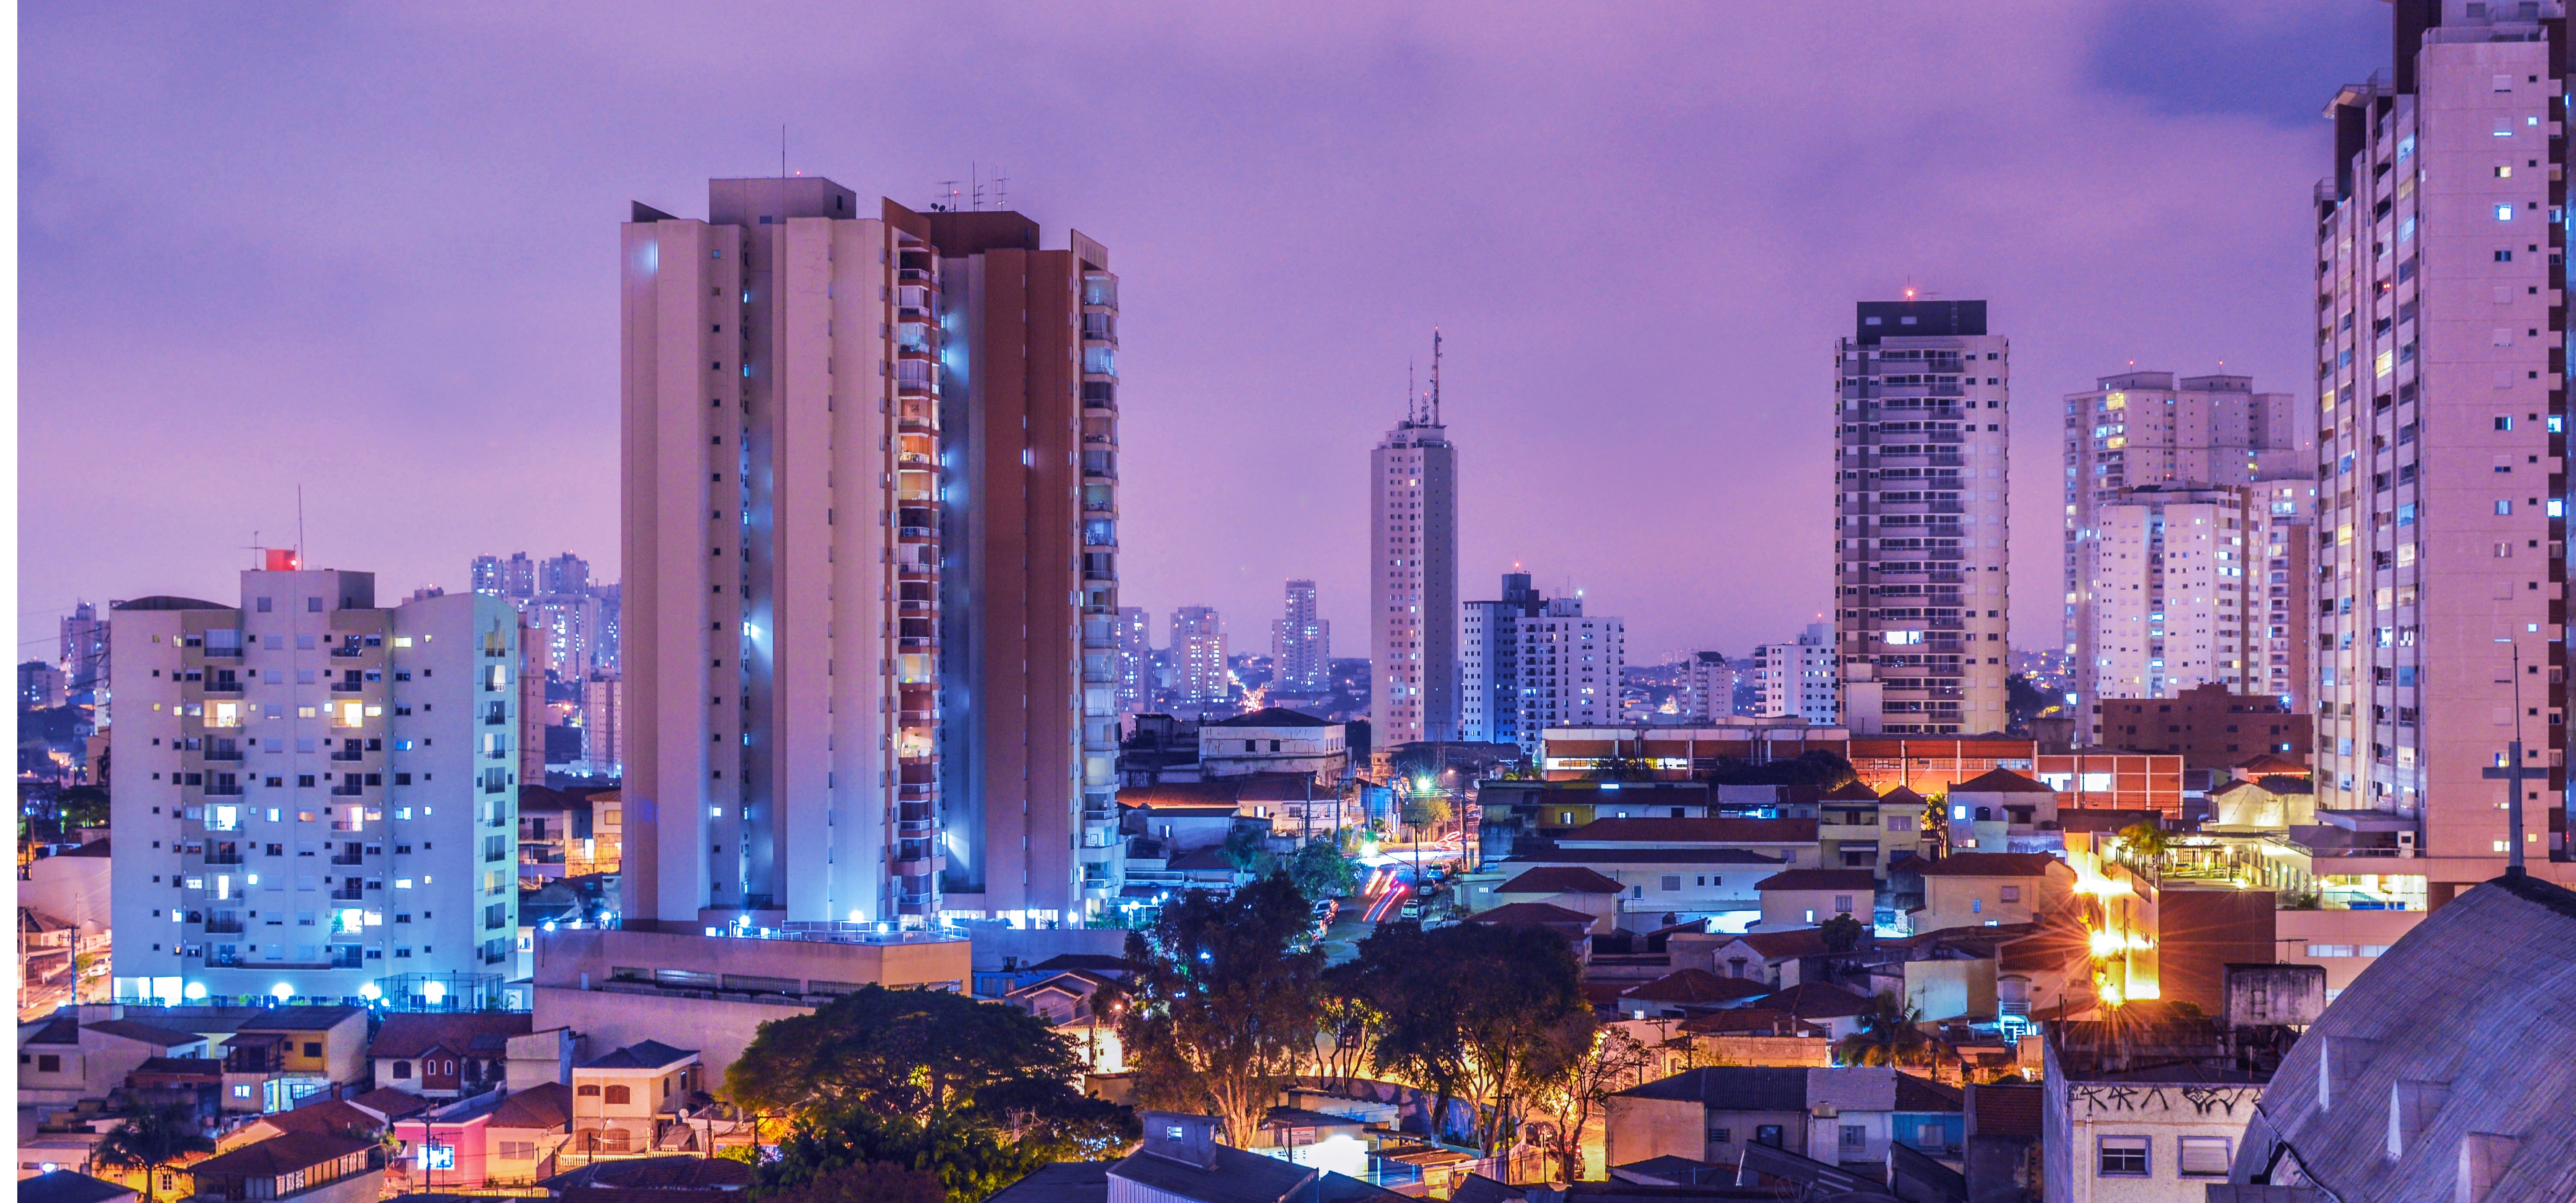 night-time-city-scape-of-sao-paulo-brazil-1